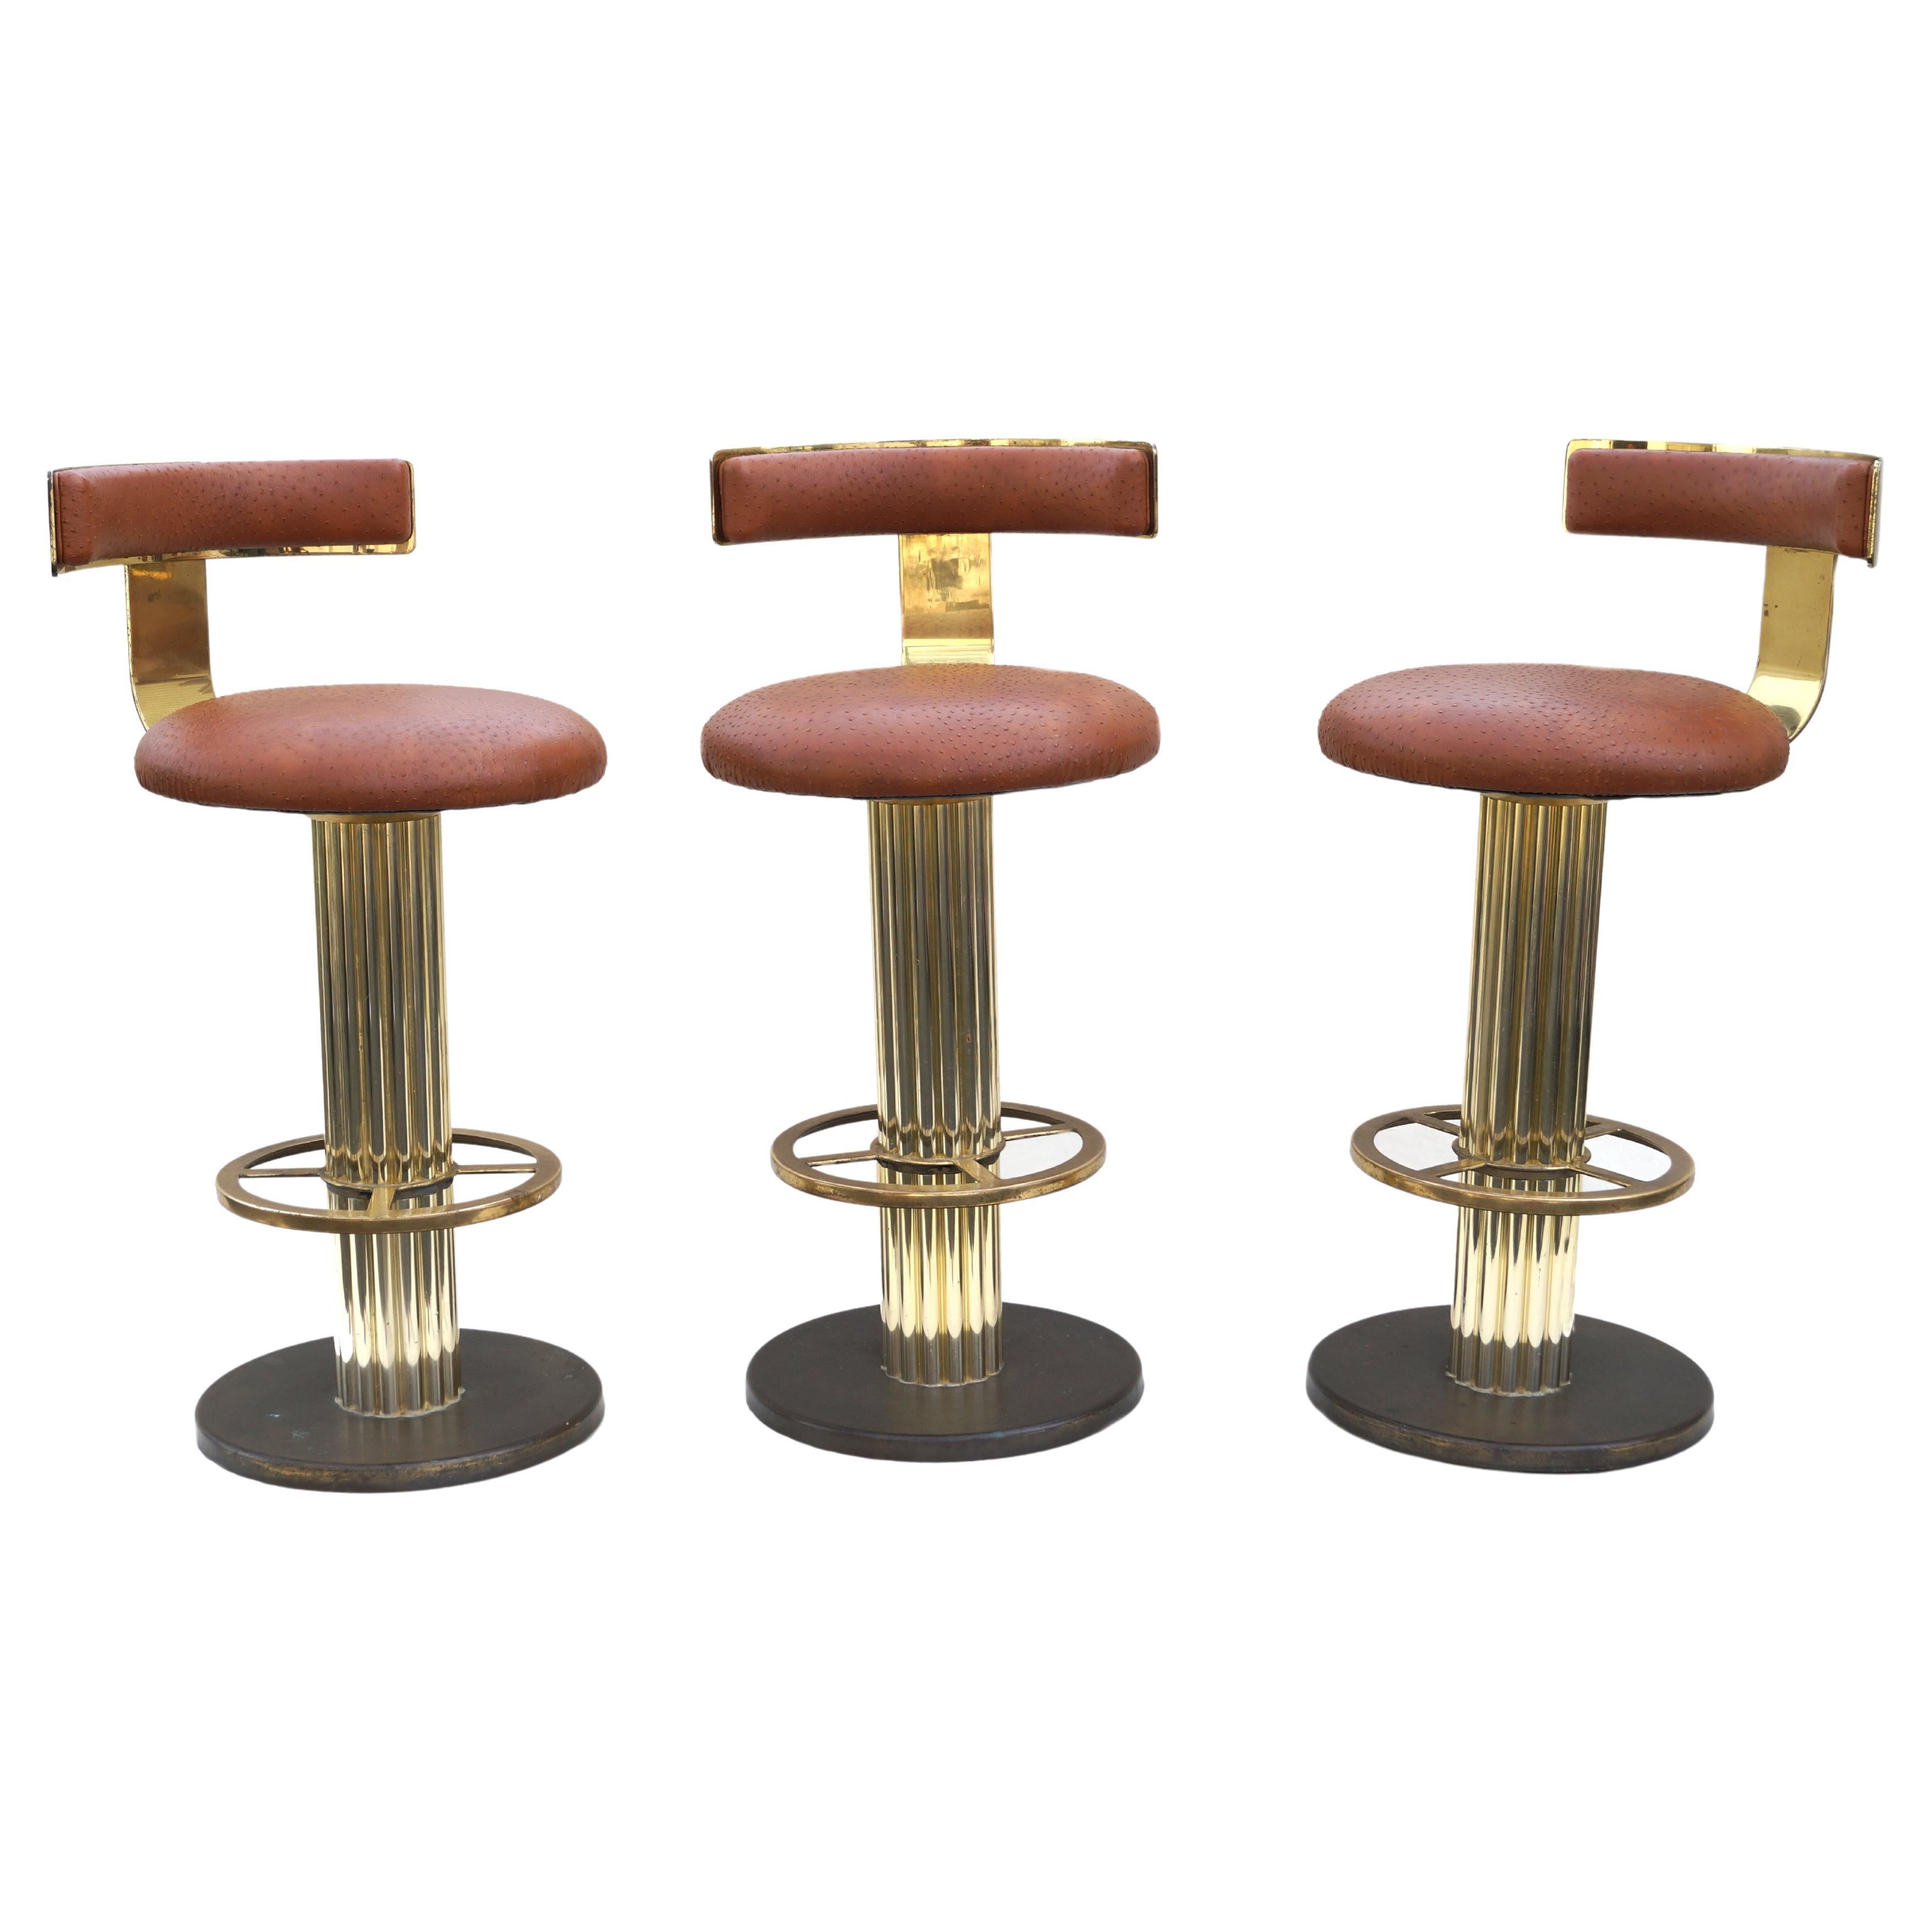 Modern Design For Leisure Ostrich Brass Bar Stools Set of 3 Barstool